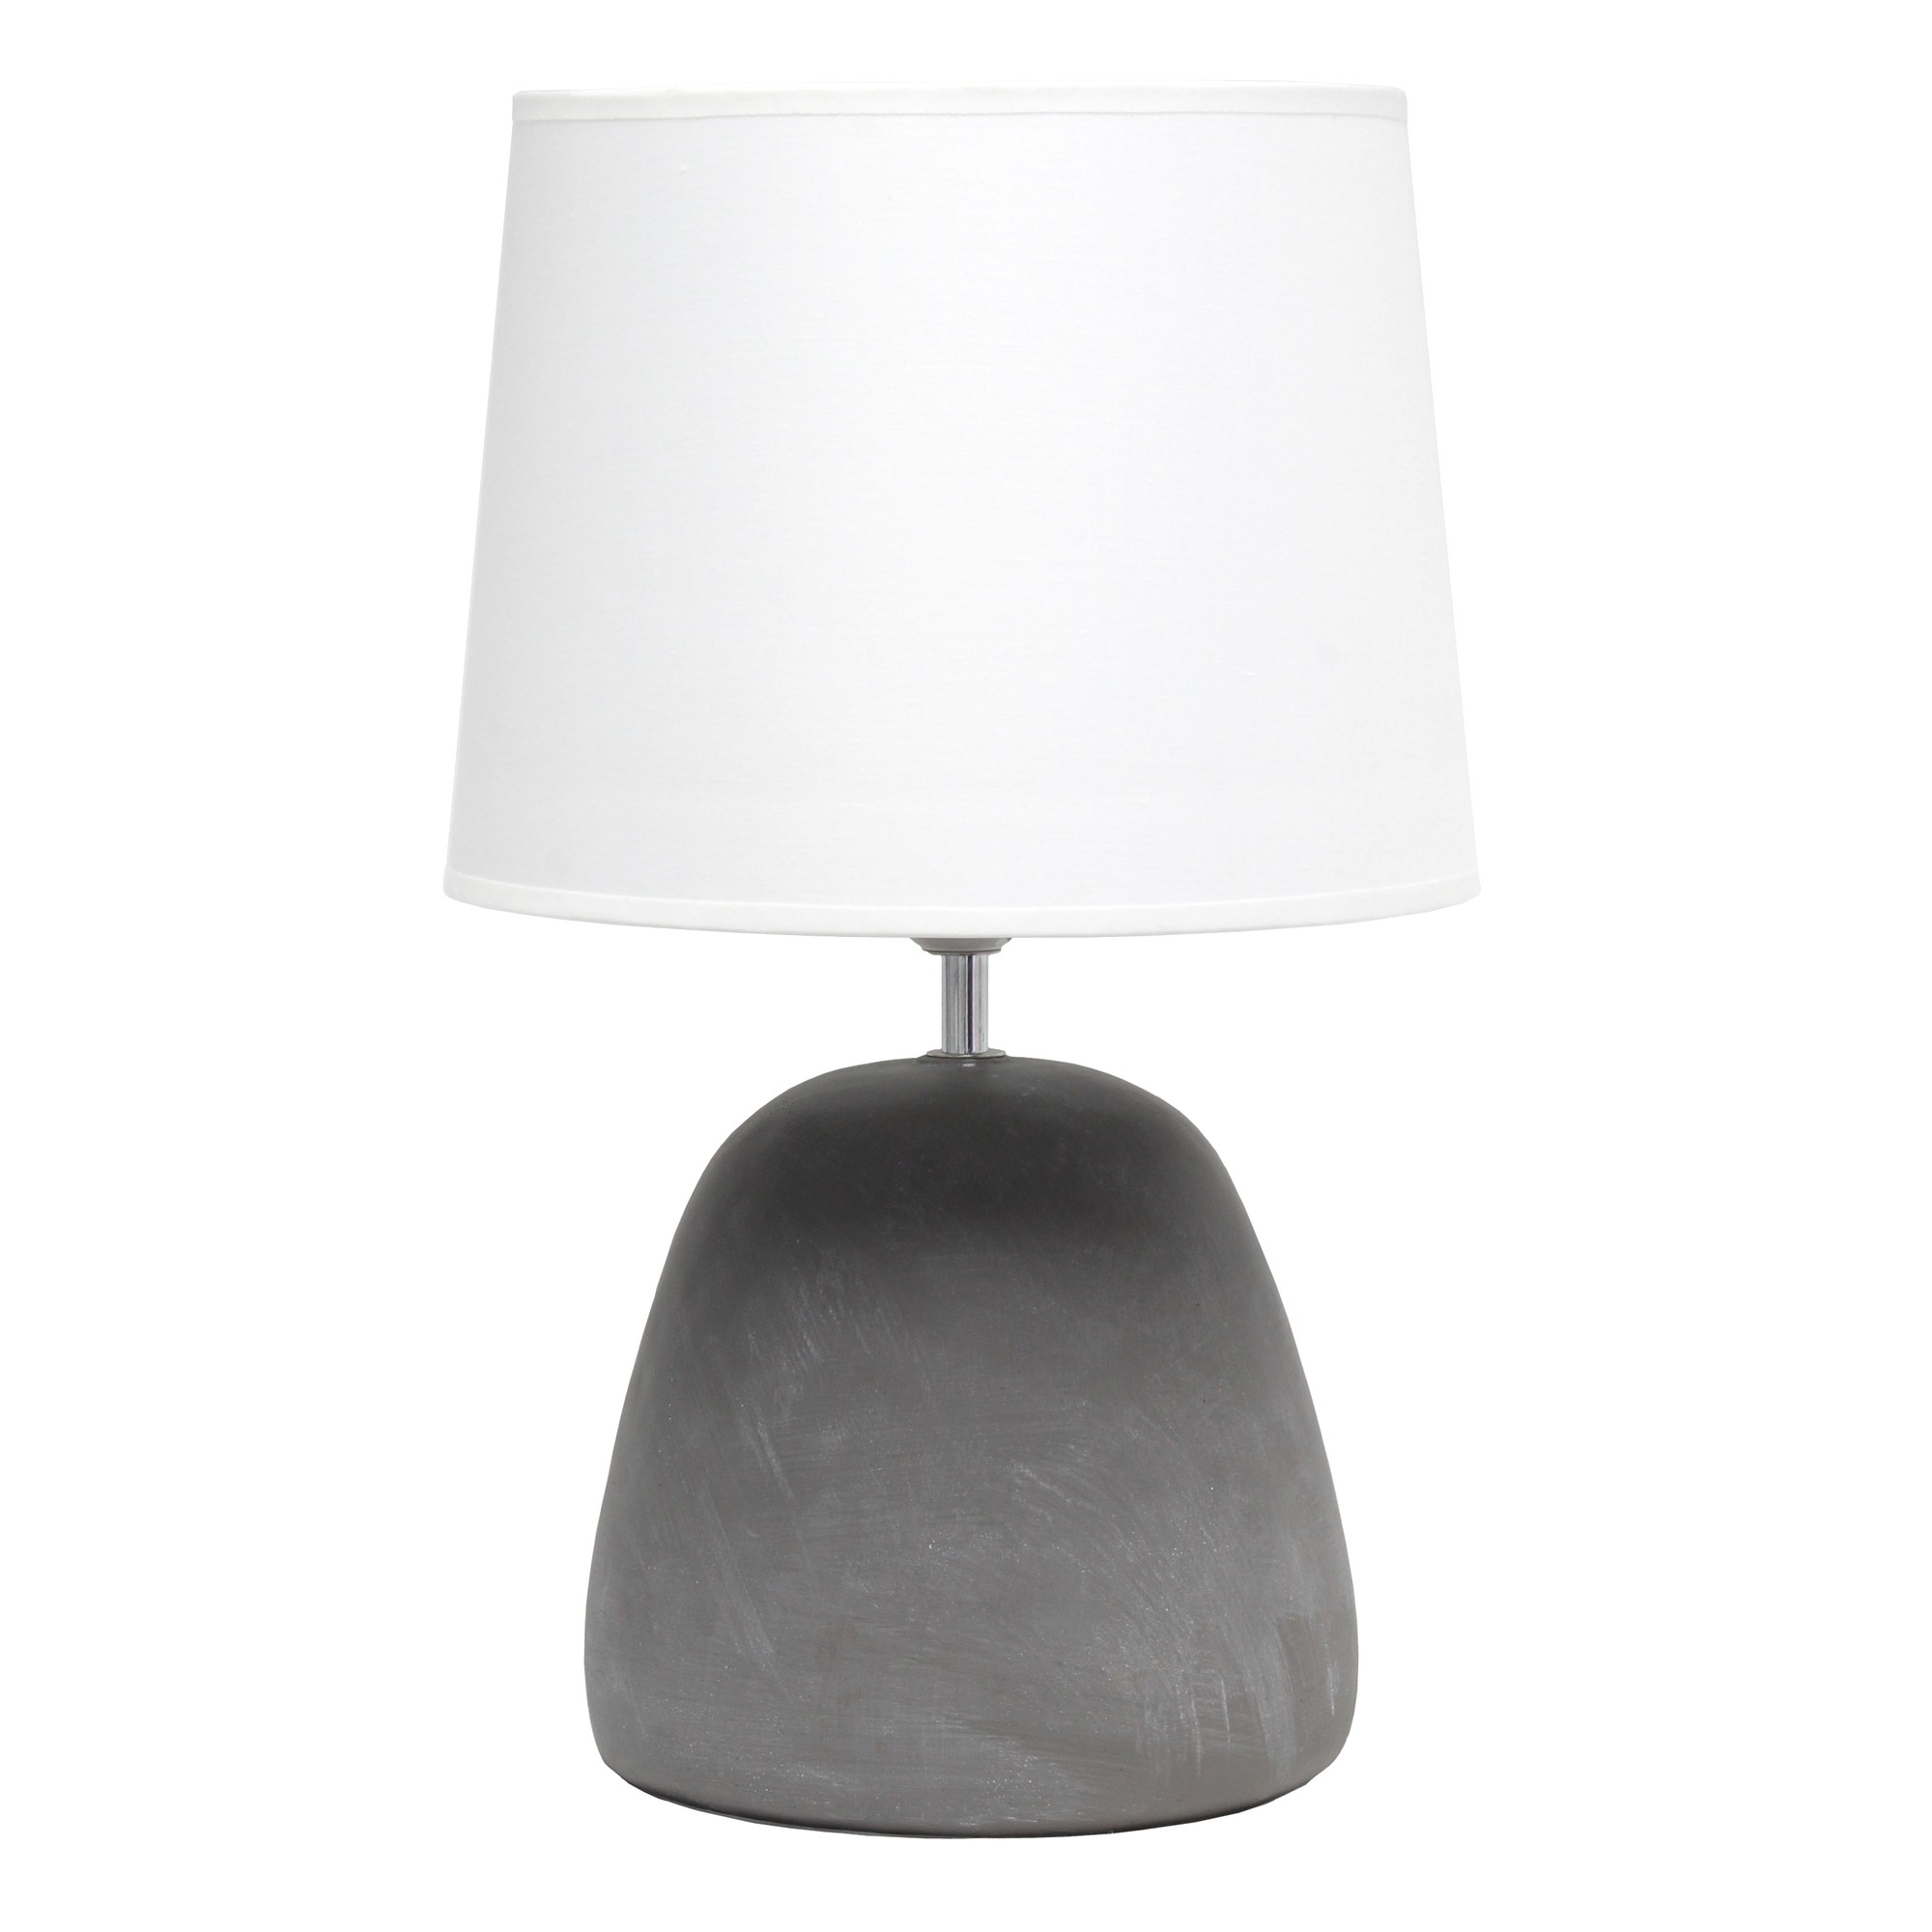 Simple Designs Round Concrete Table Lamp, White